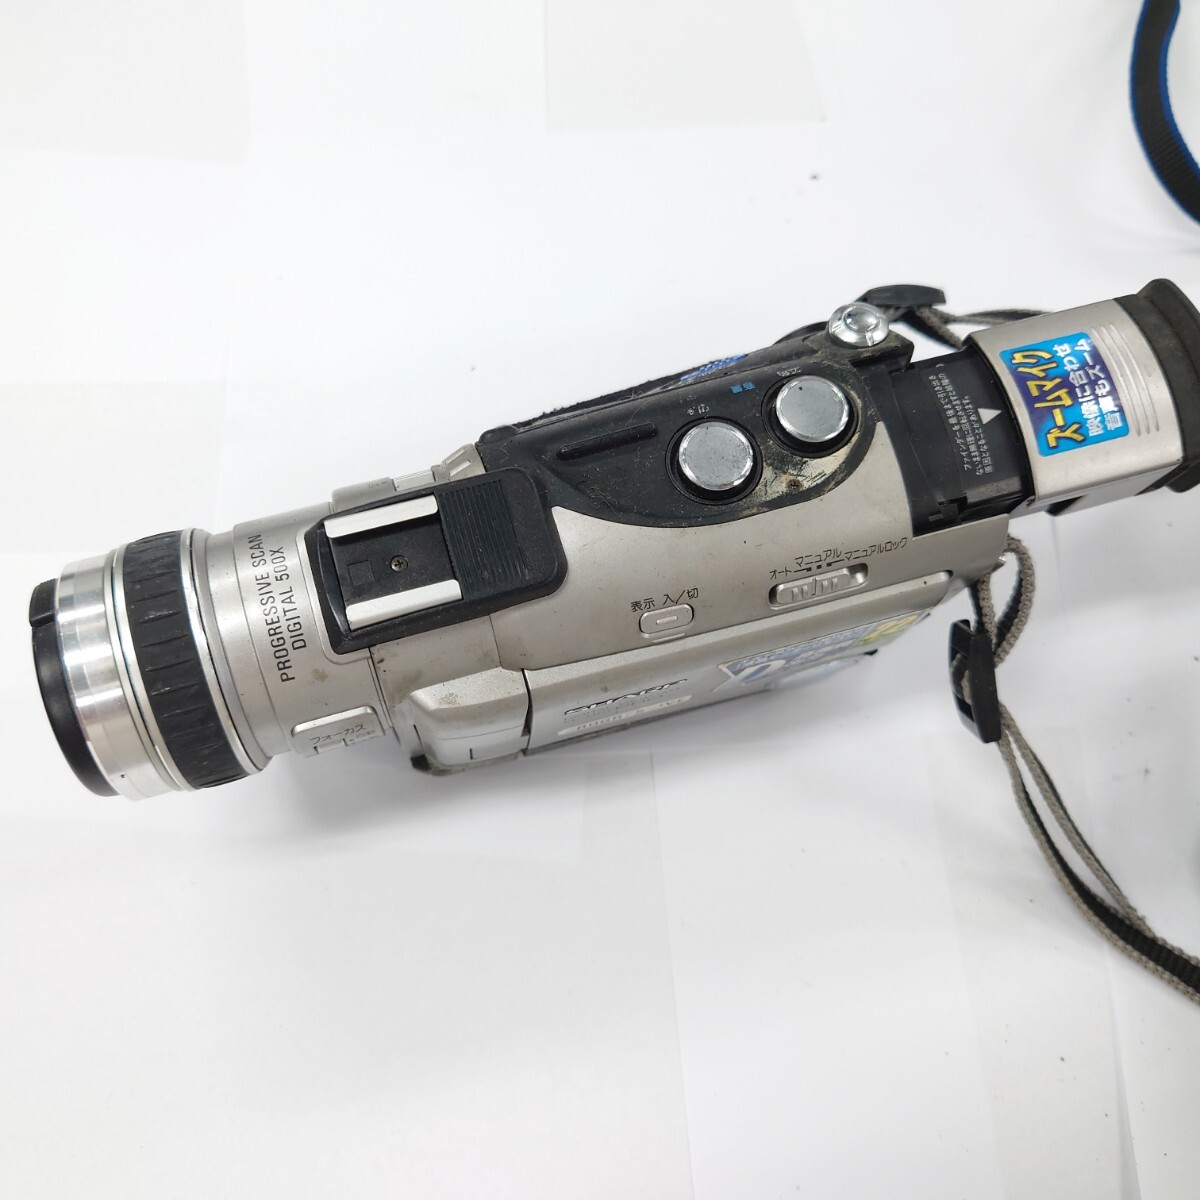 I954 カメラ まとめ SHARP VL-MR1 MINOLTA 7000 Canon EOS 55 ZOOM LENS EF 28-105mm 1:3.5-4.5 デジカメ 中古 ジャンク品 訳あり